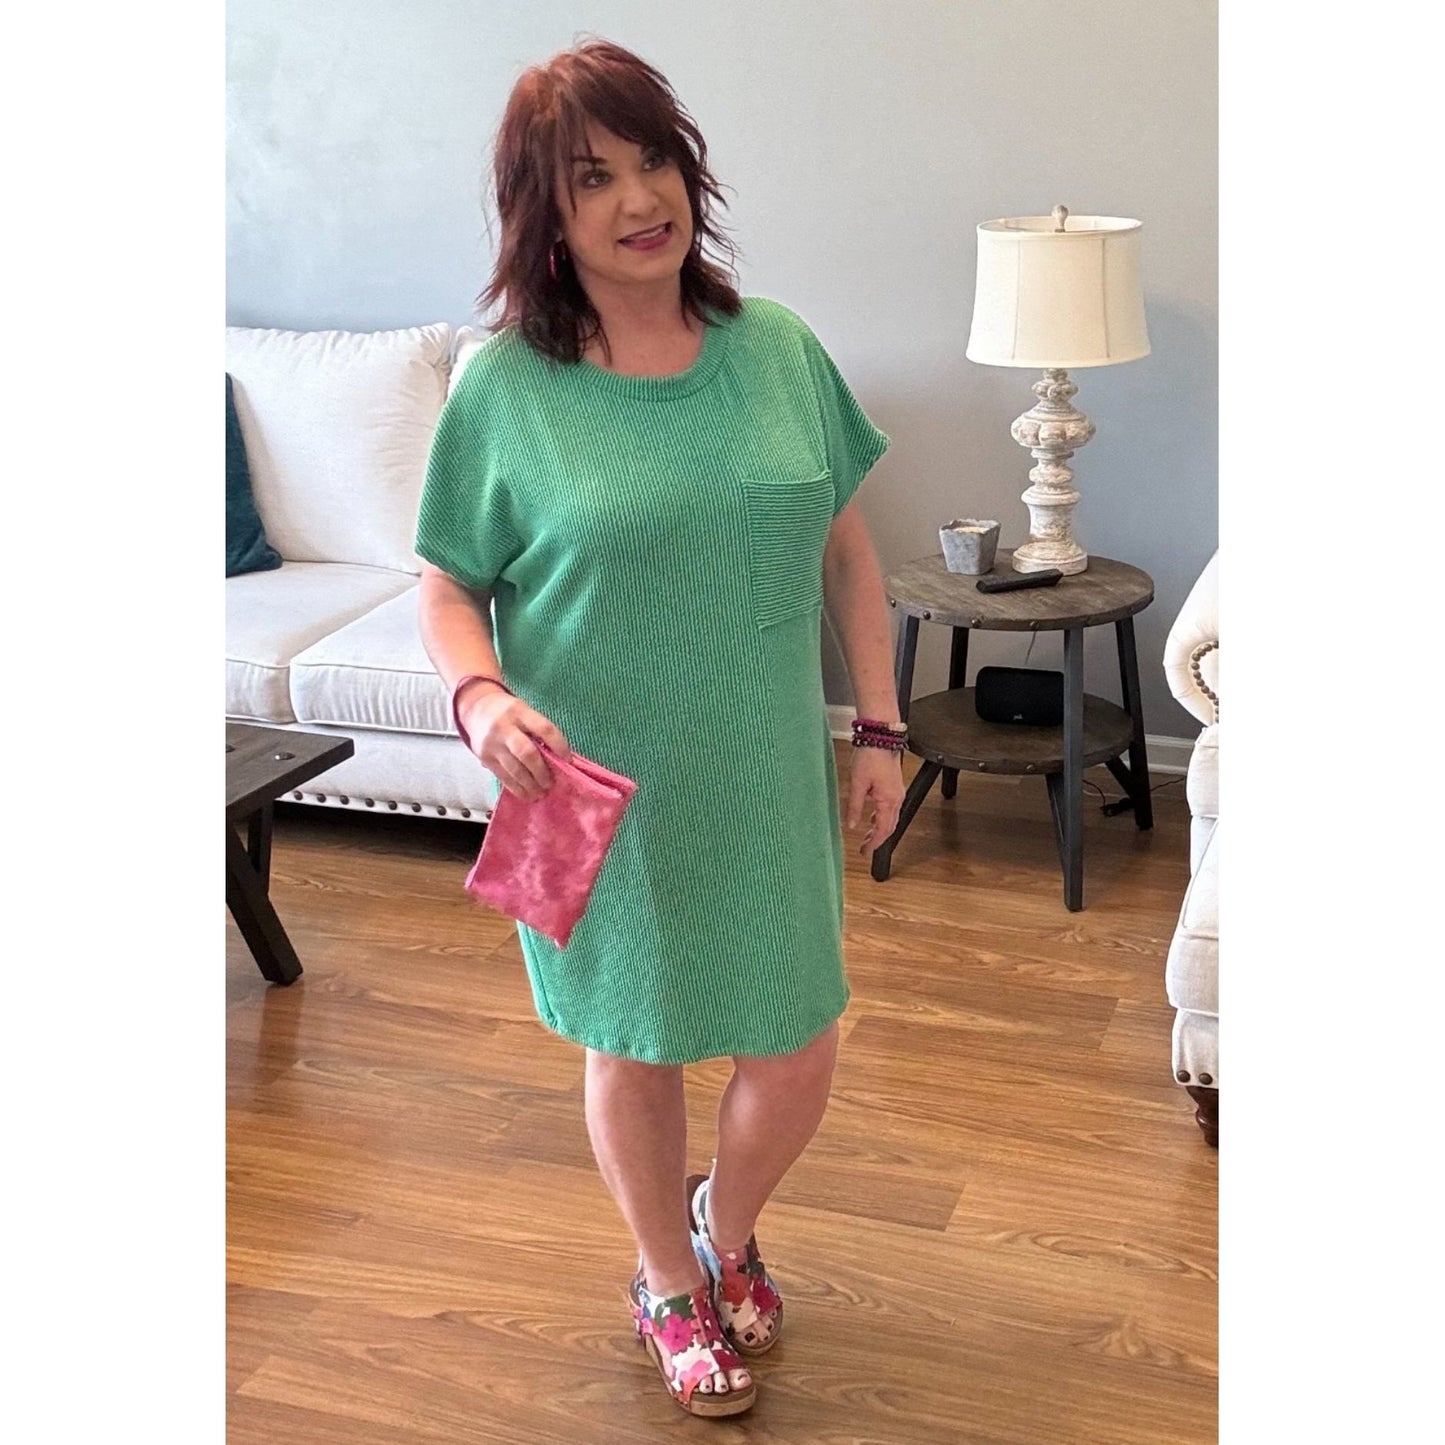 The Kelly Green Ribbed Knit Dress